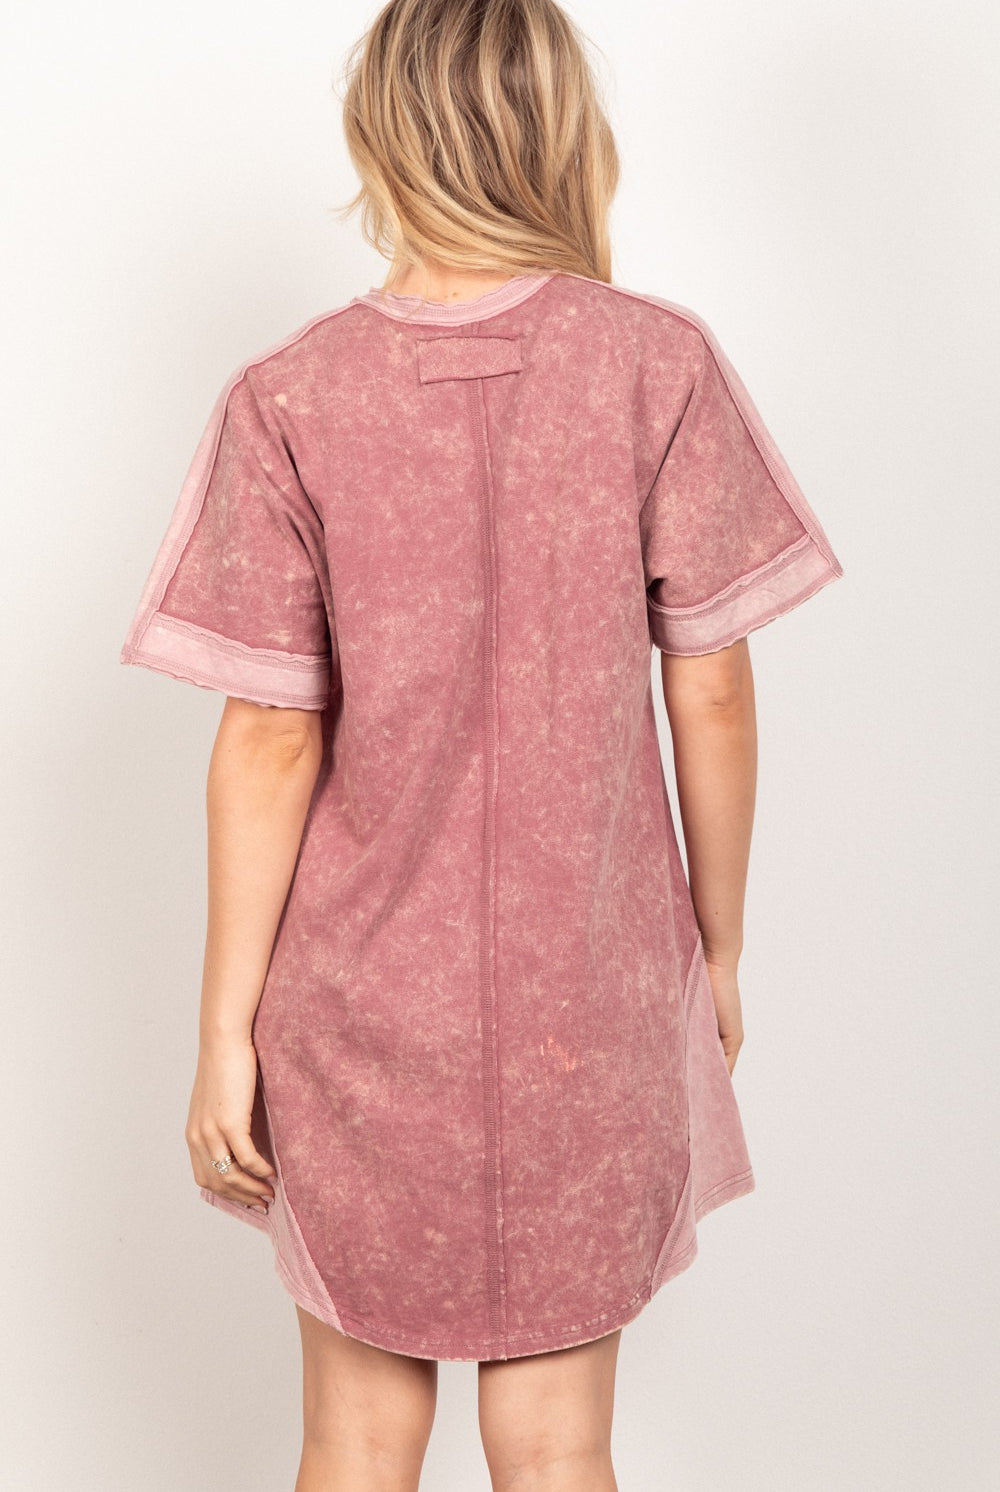 VERY J Short Sleeve V-Neck Tee Dress-Krush Kandy, Women's Online Fashion Boutique Located in Phoenix, Arizona (Scottsdale Area)